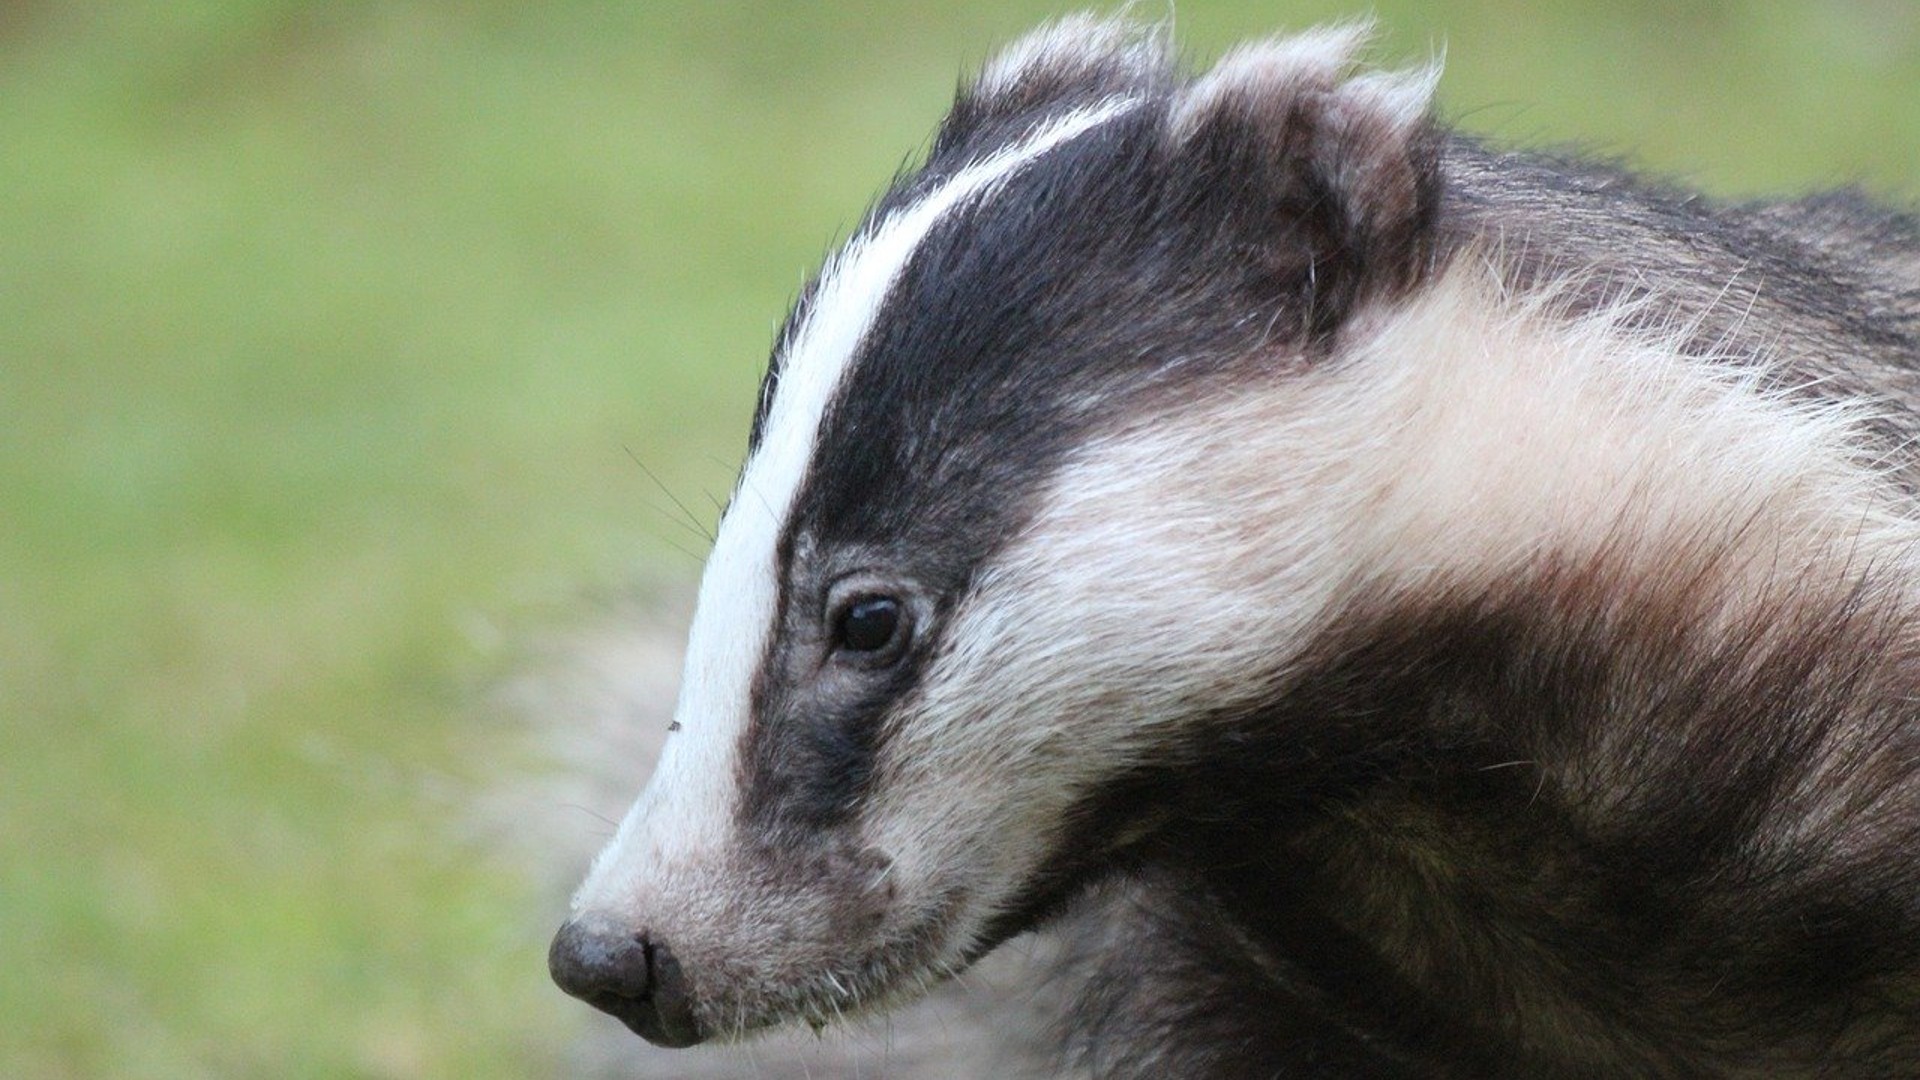 A close up portrait shot of a wild badger